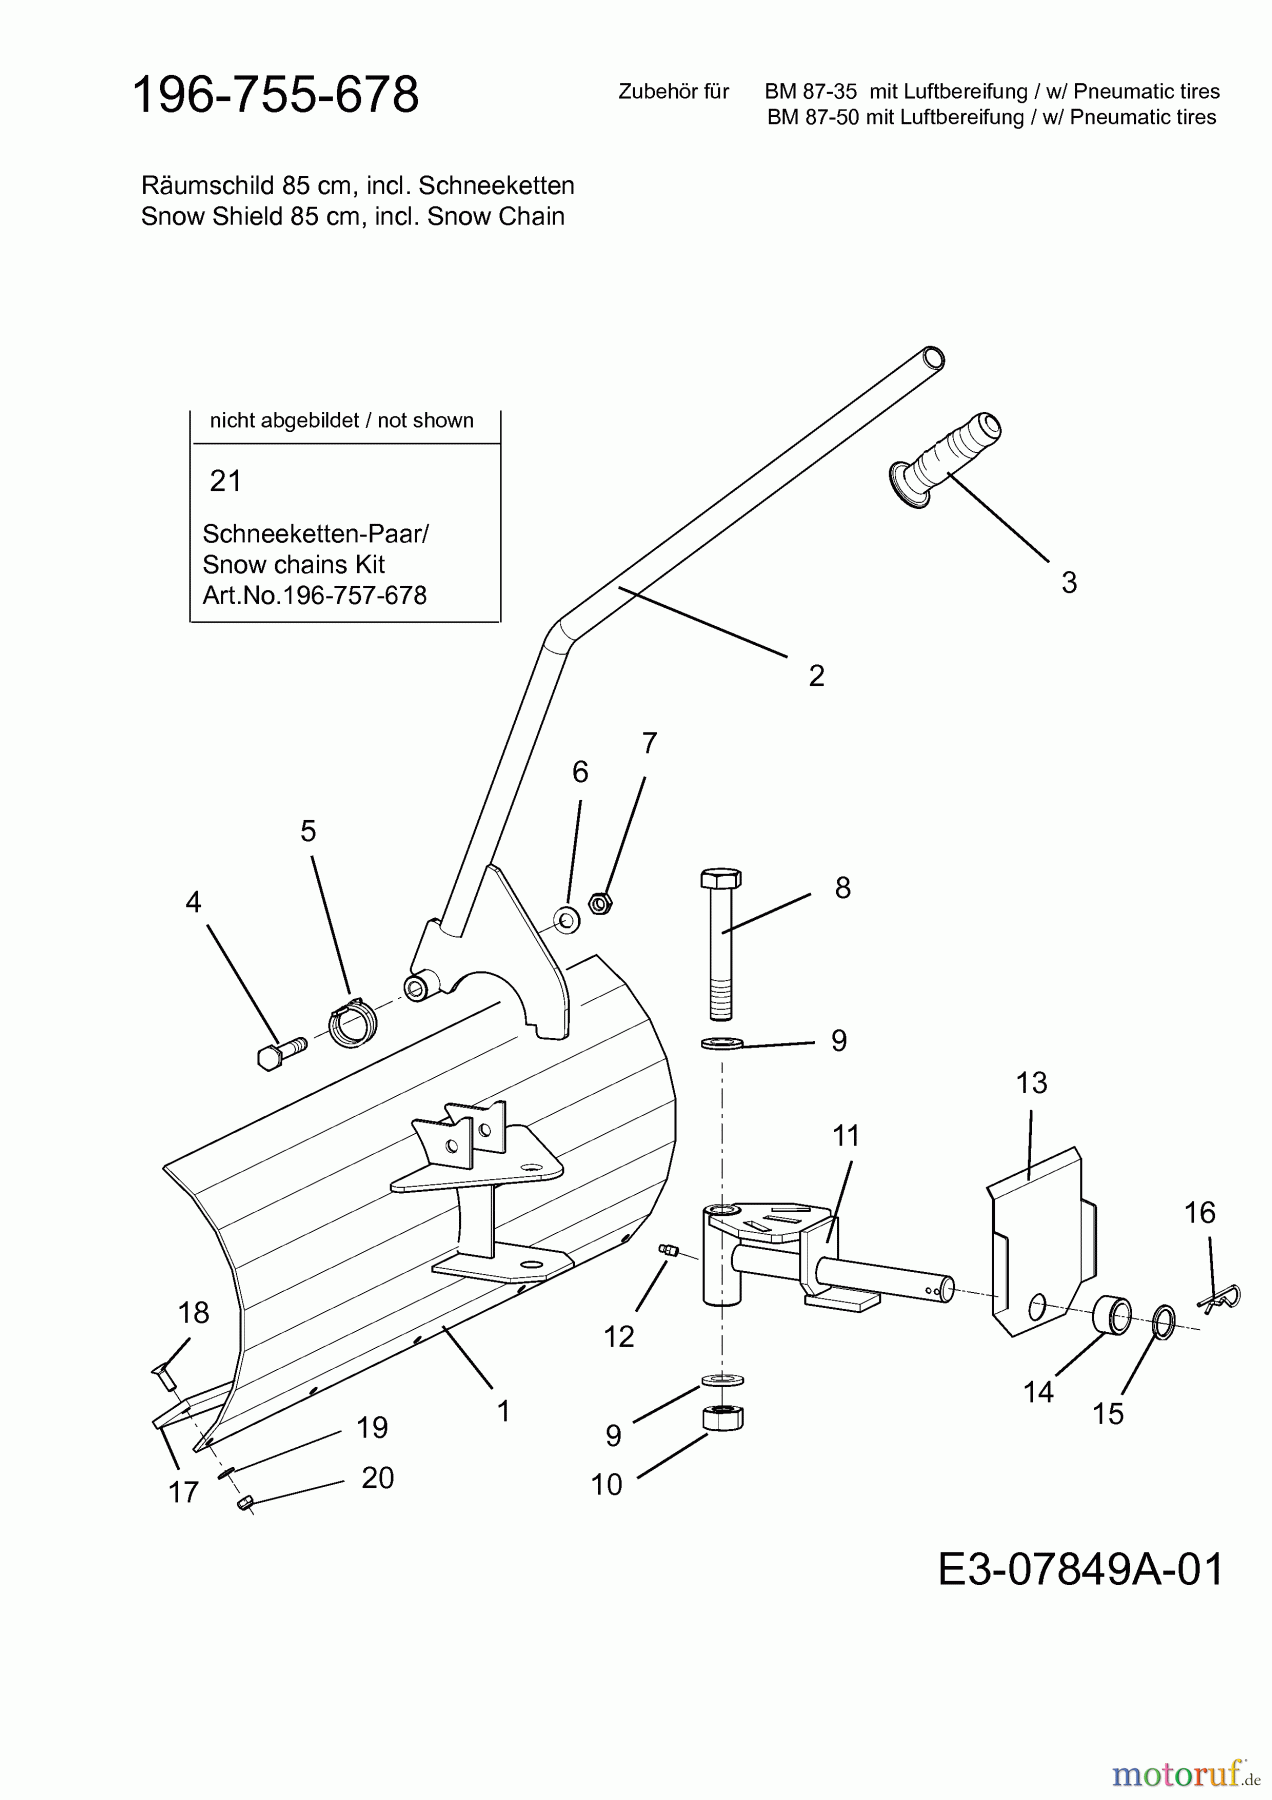  MTD Accessories Accessories cutterbar mower Snow blade for BM 87-35 196-755-678  (2011) Snowblade